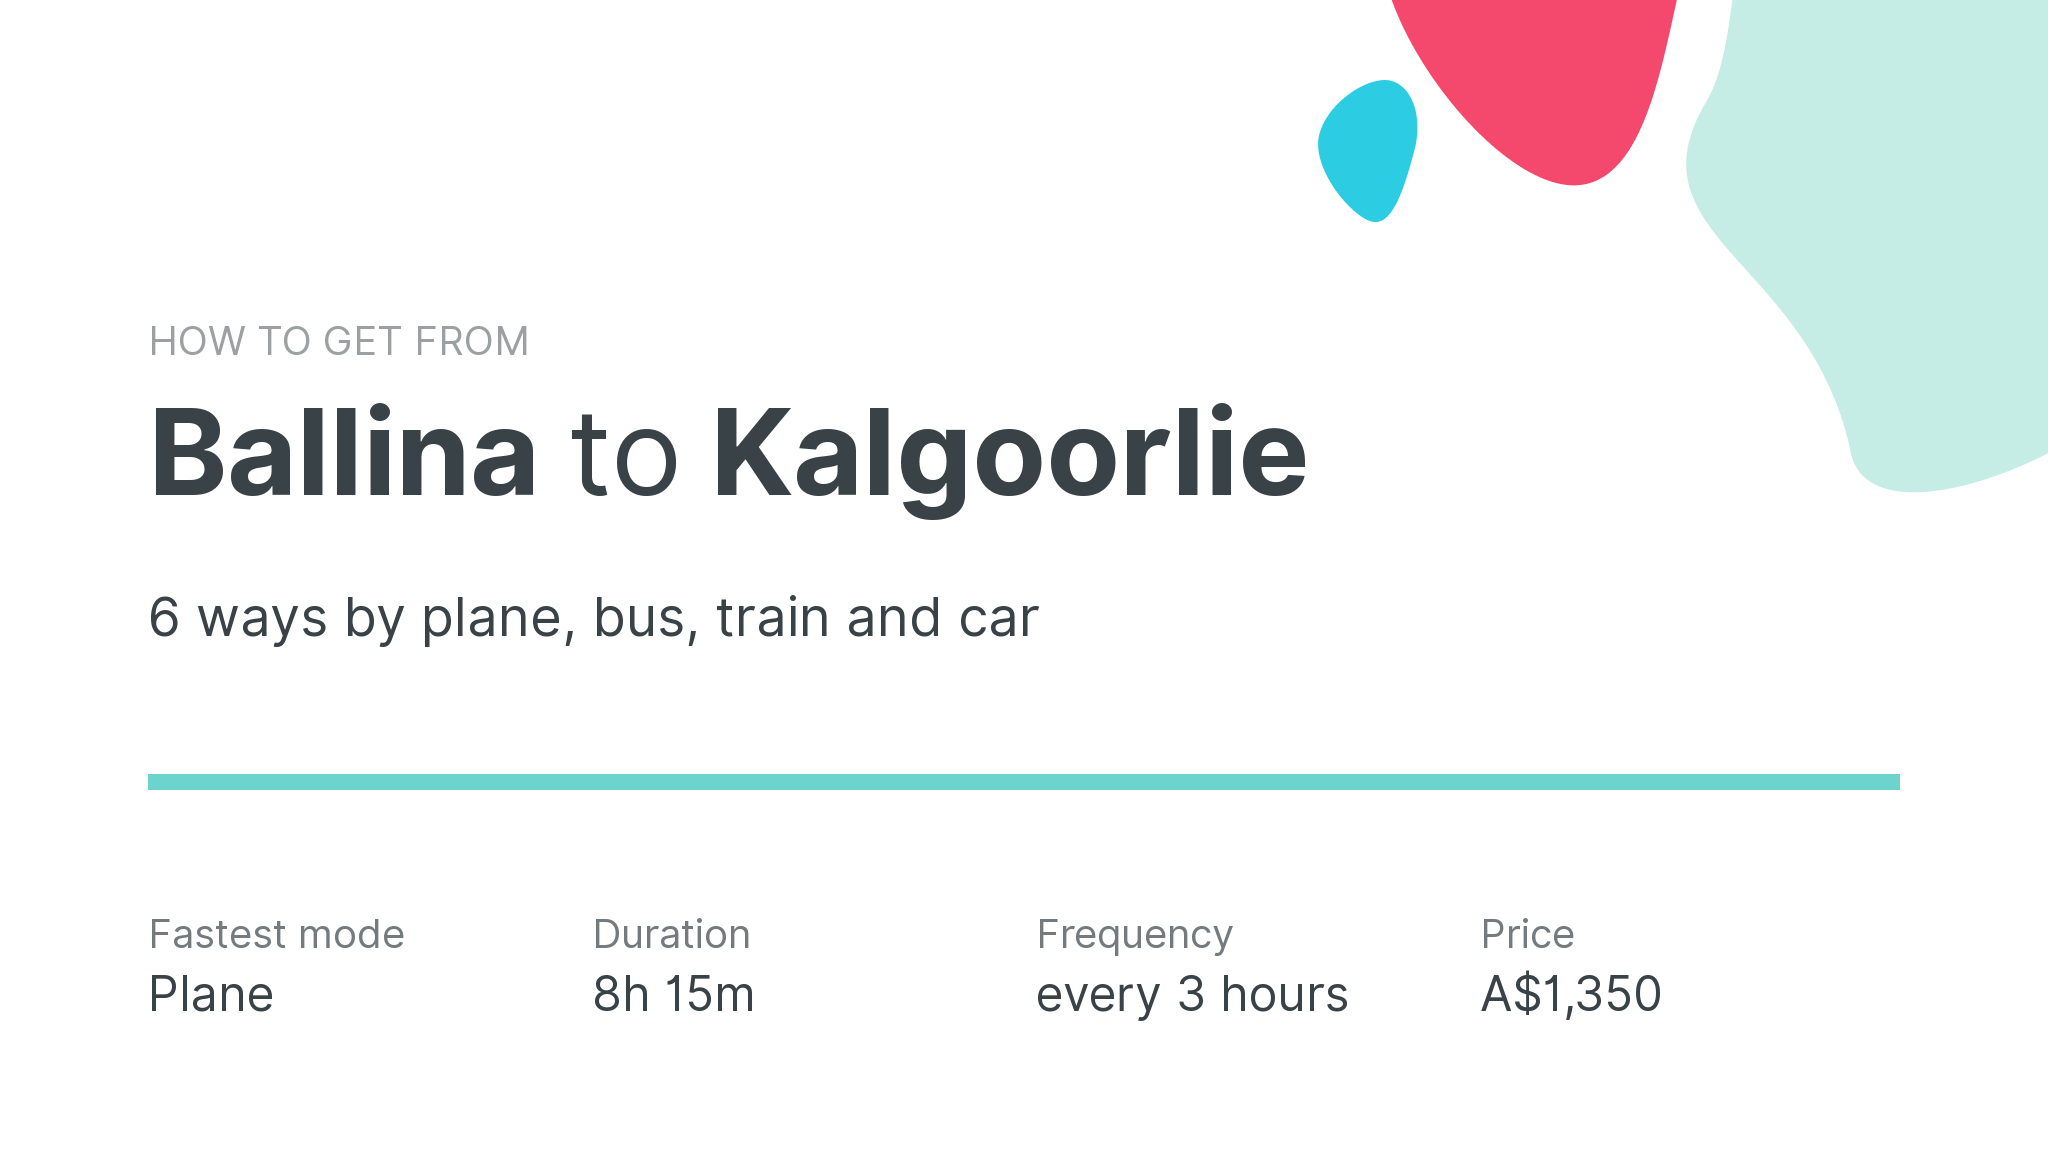 How do I get from Ballina to Kalgoorlie